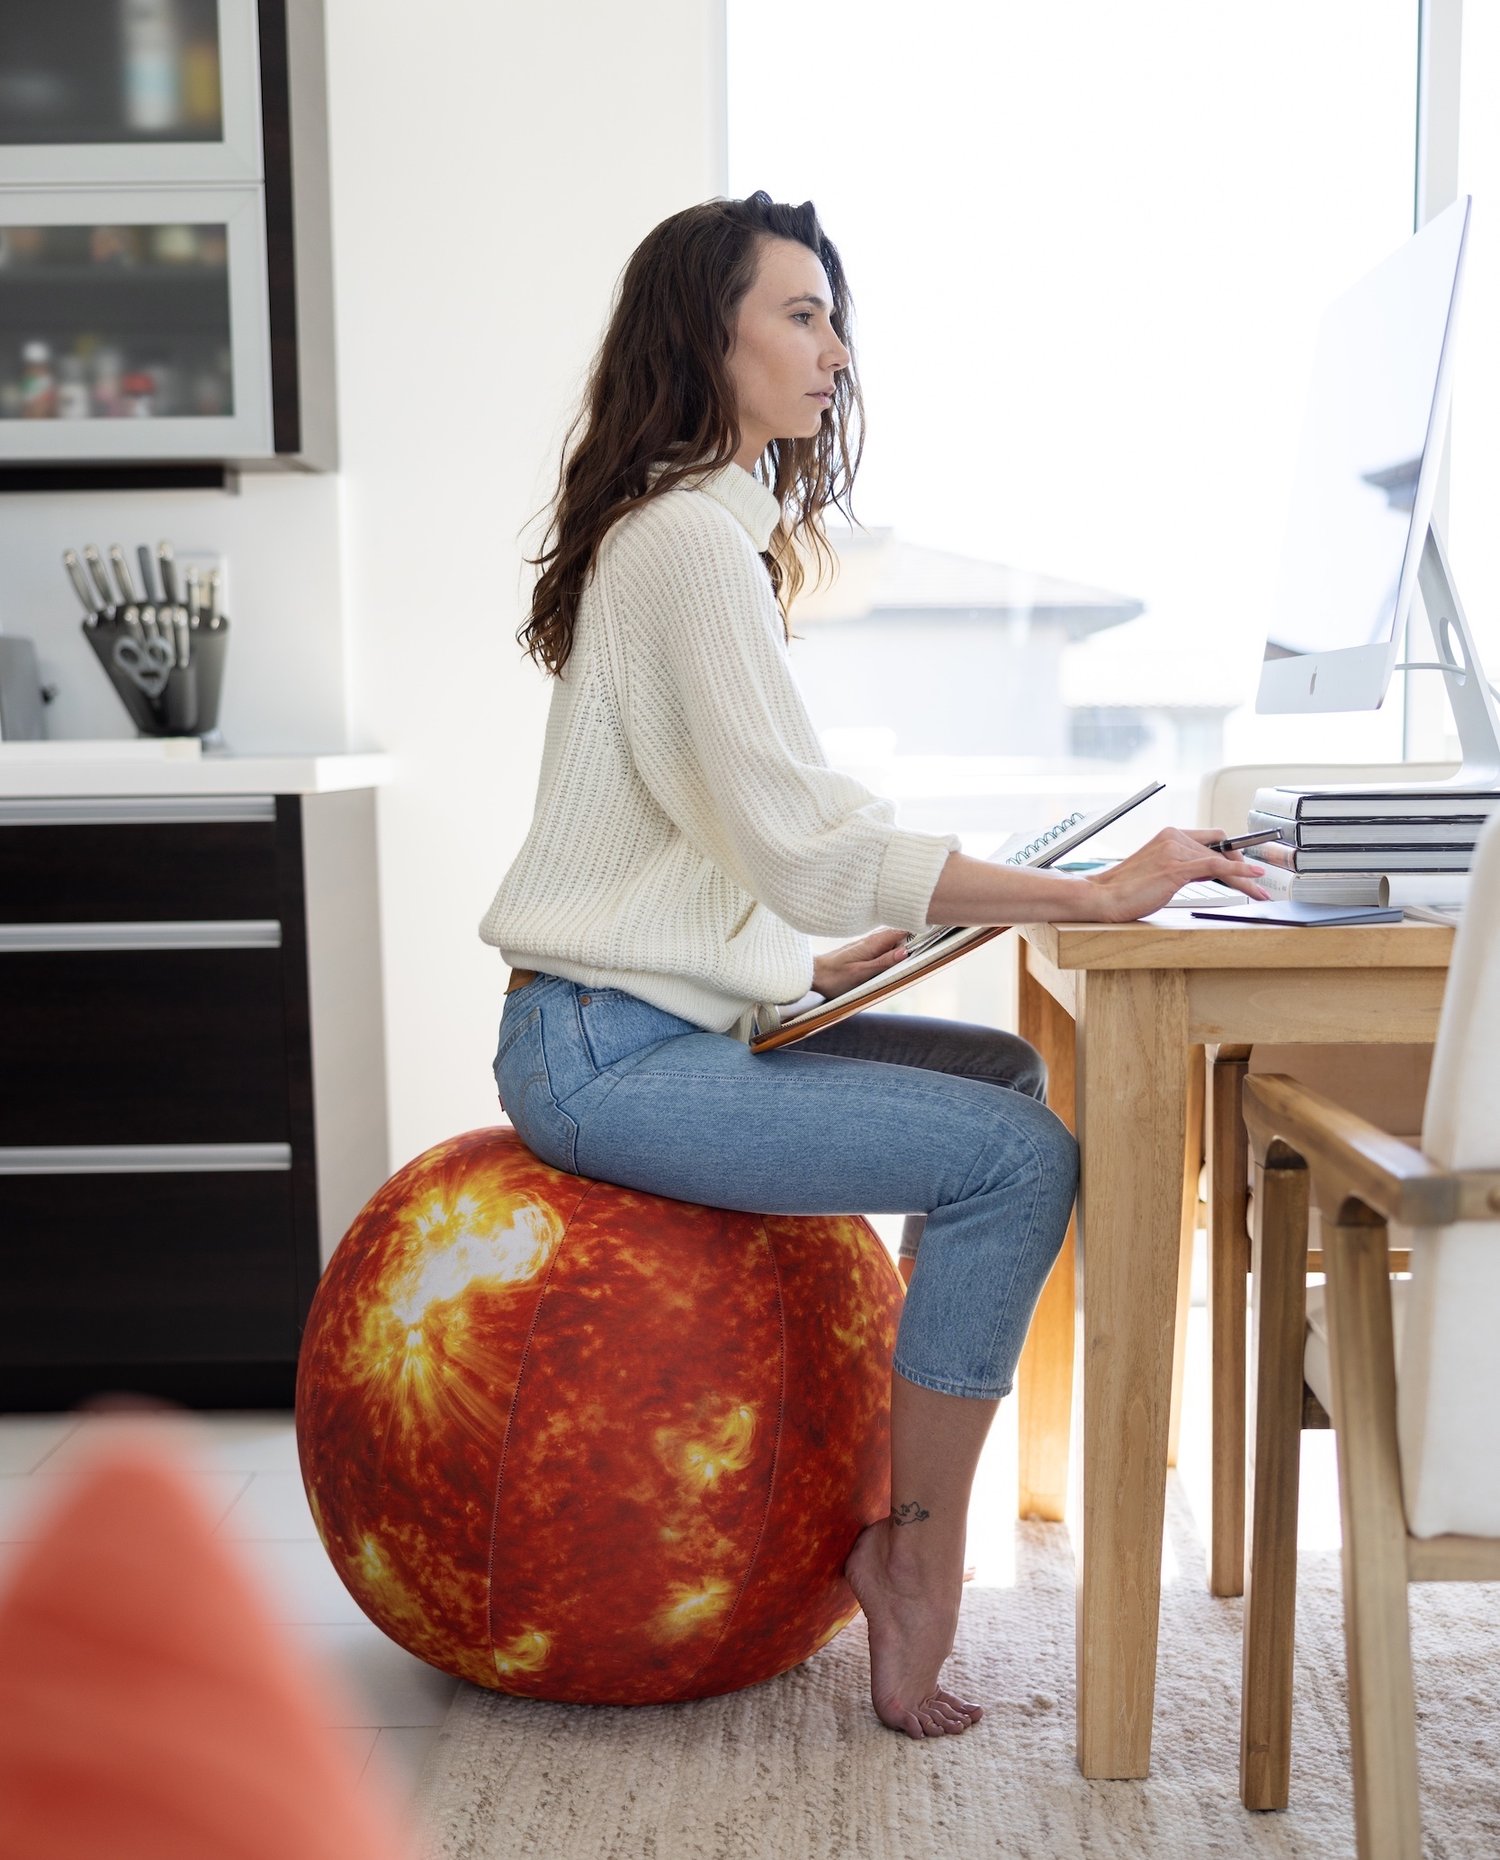 Venn Design  Ergonomic Desk Chairs, Office Chairs, Sitting Cushions, Floor  Pads, and Wellness Furniture